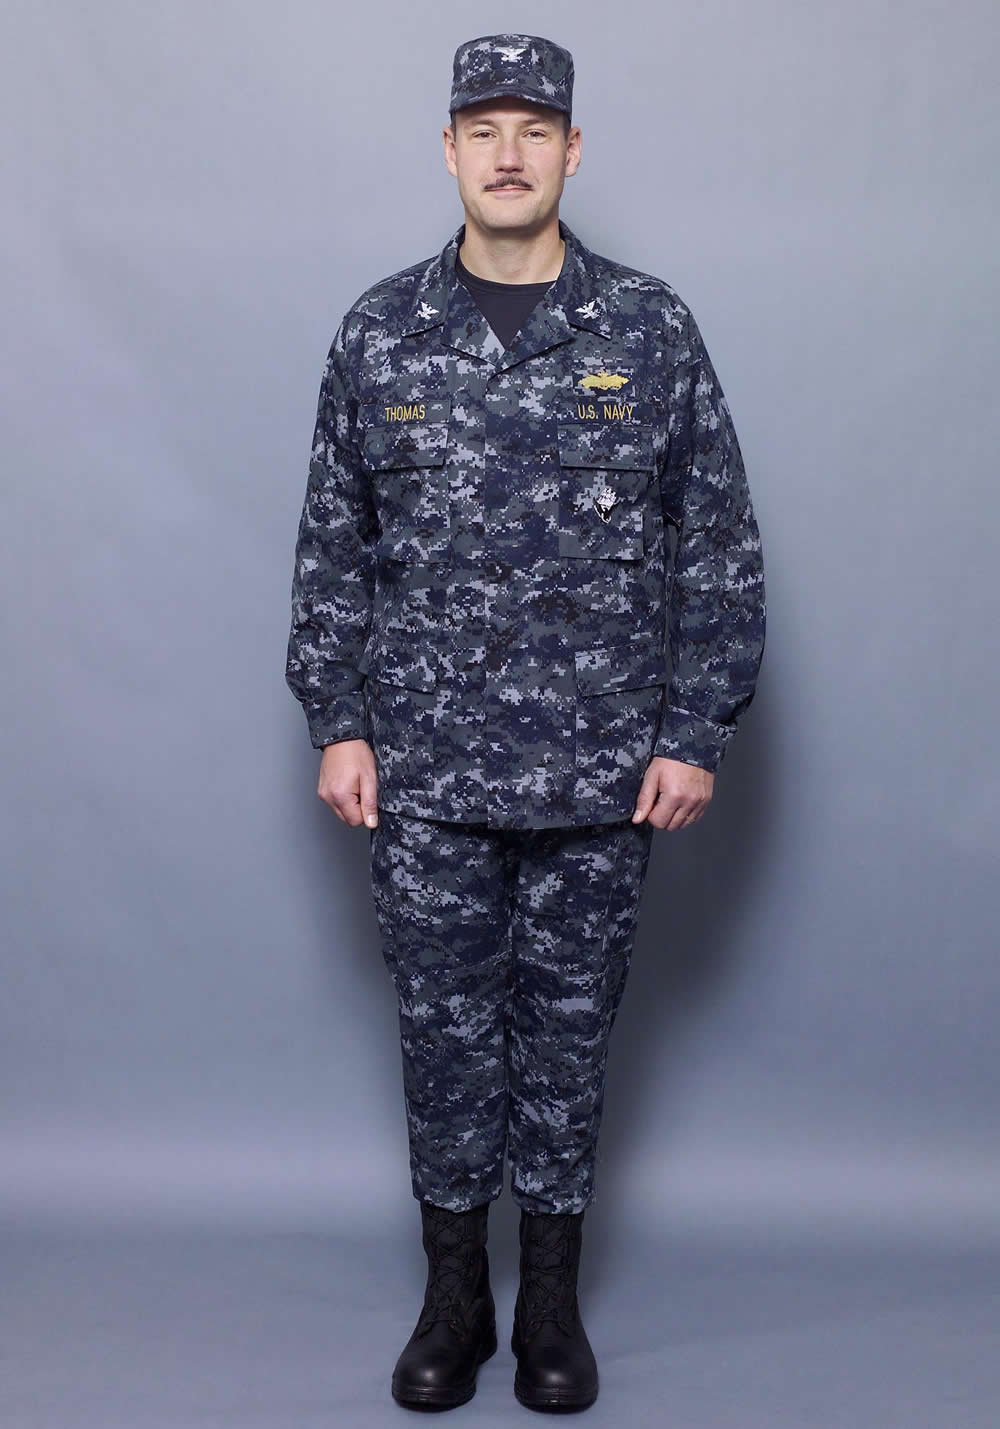 Military Photos The New Navy Work Uniform